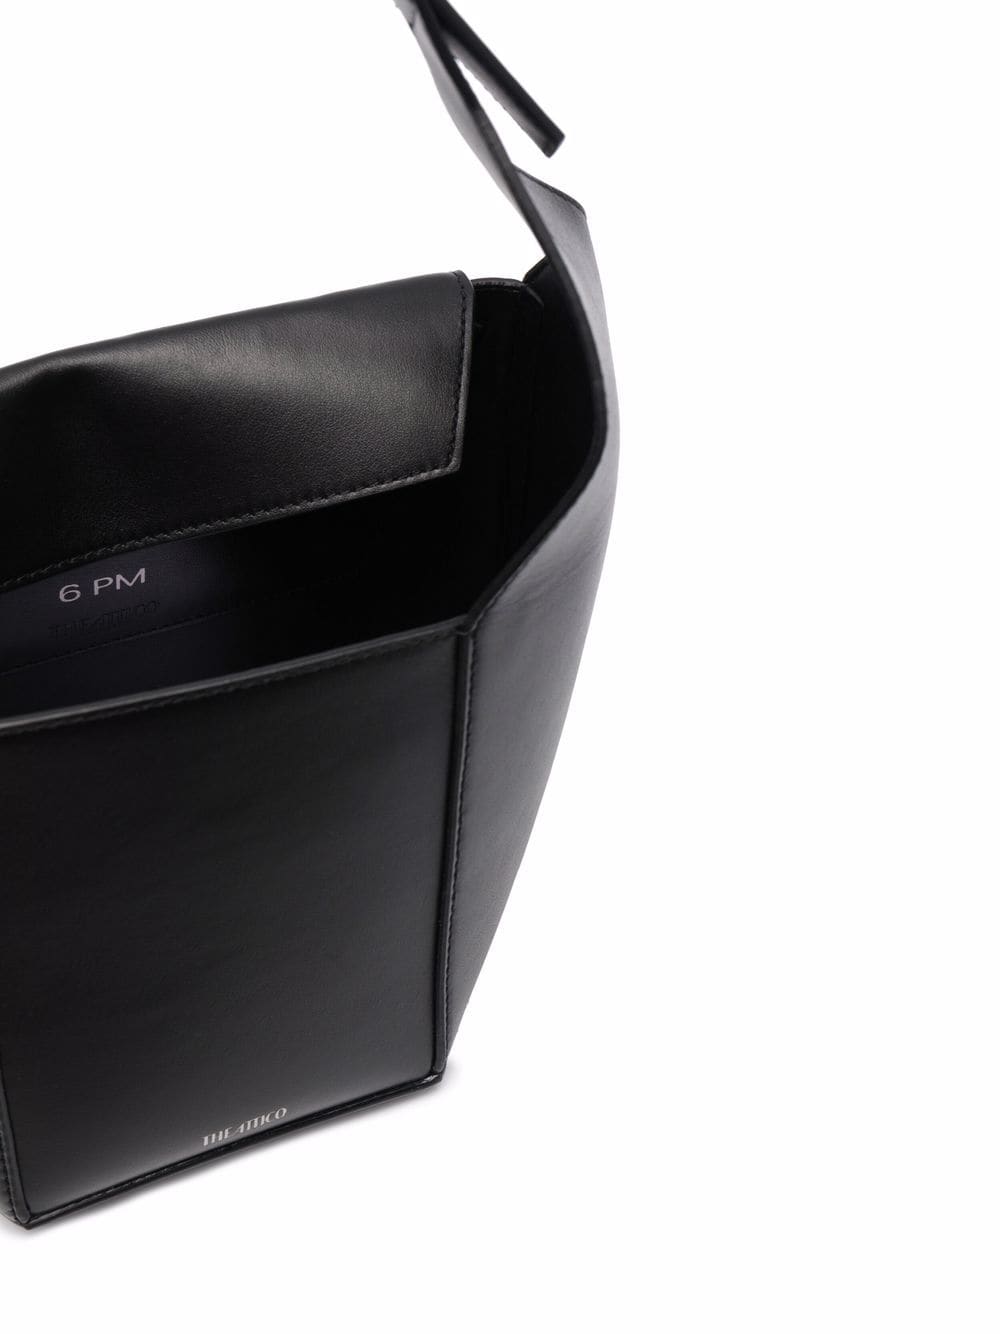 The Attico Leather Geometric Top Handle Bag in Black